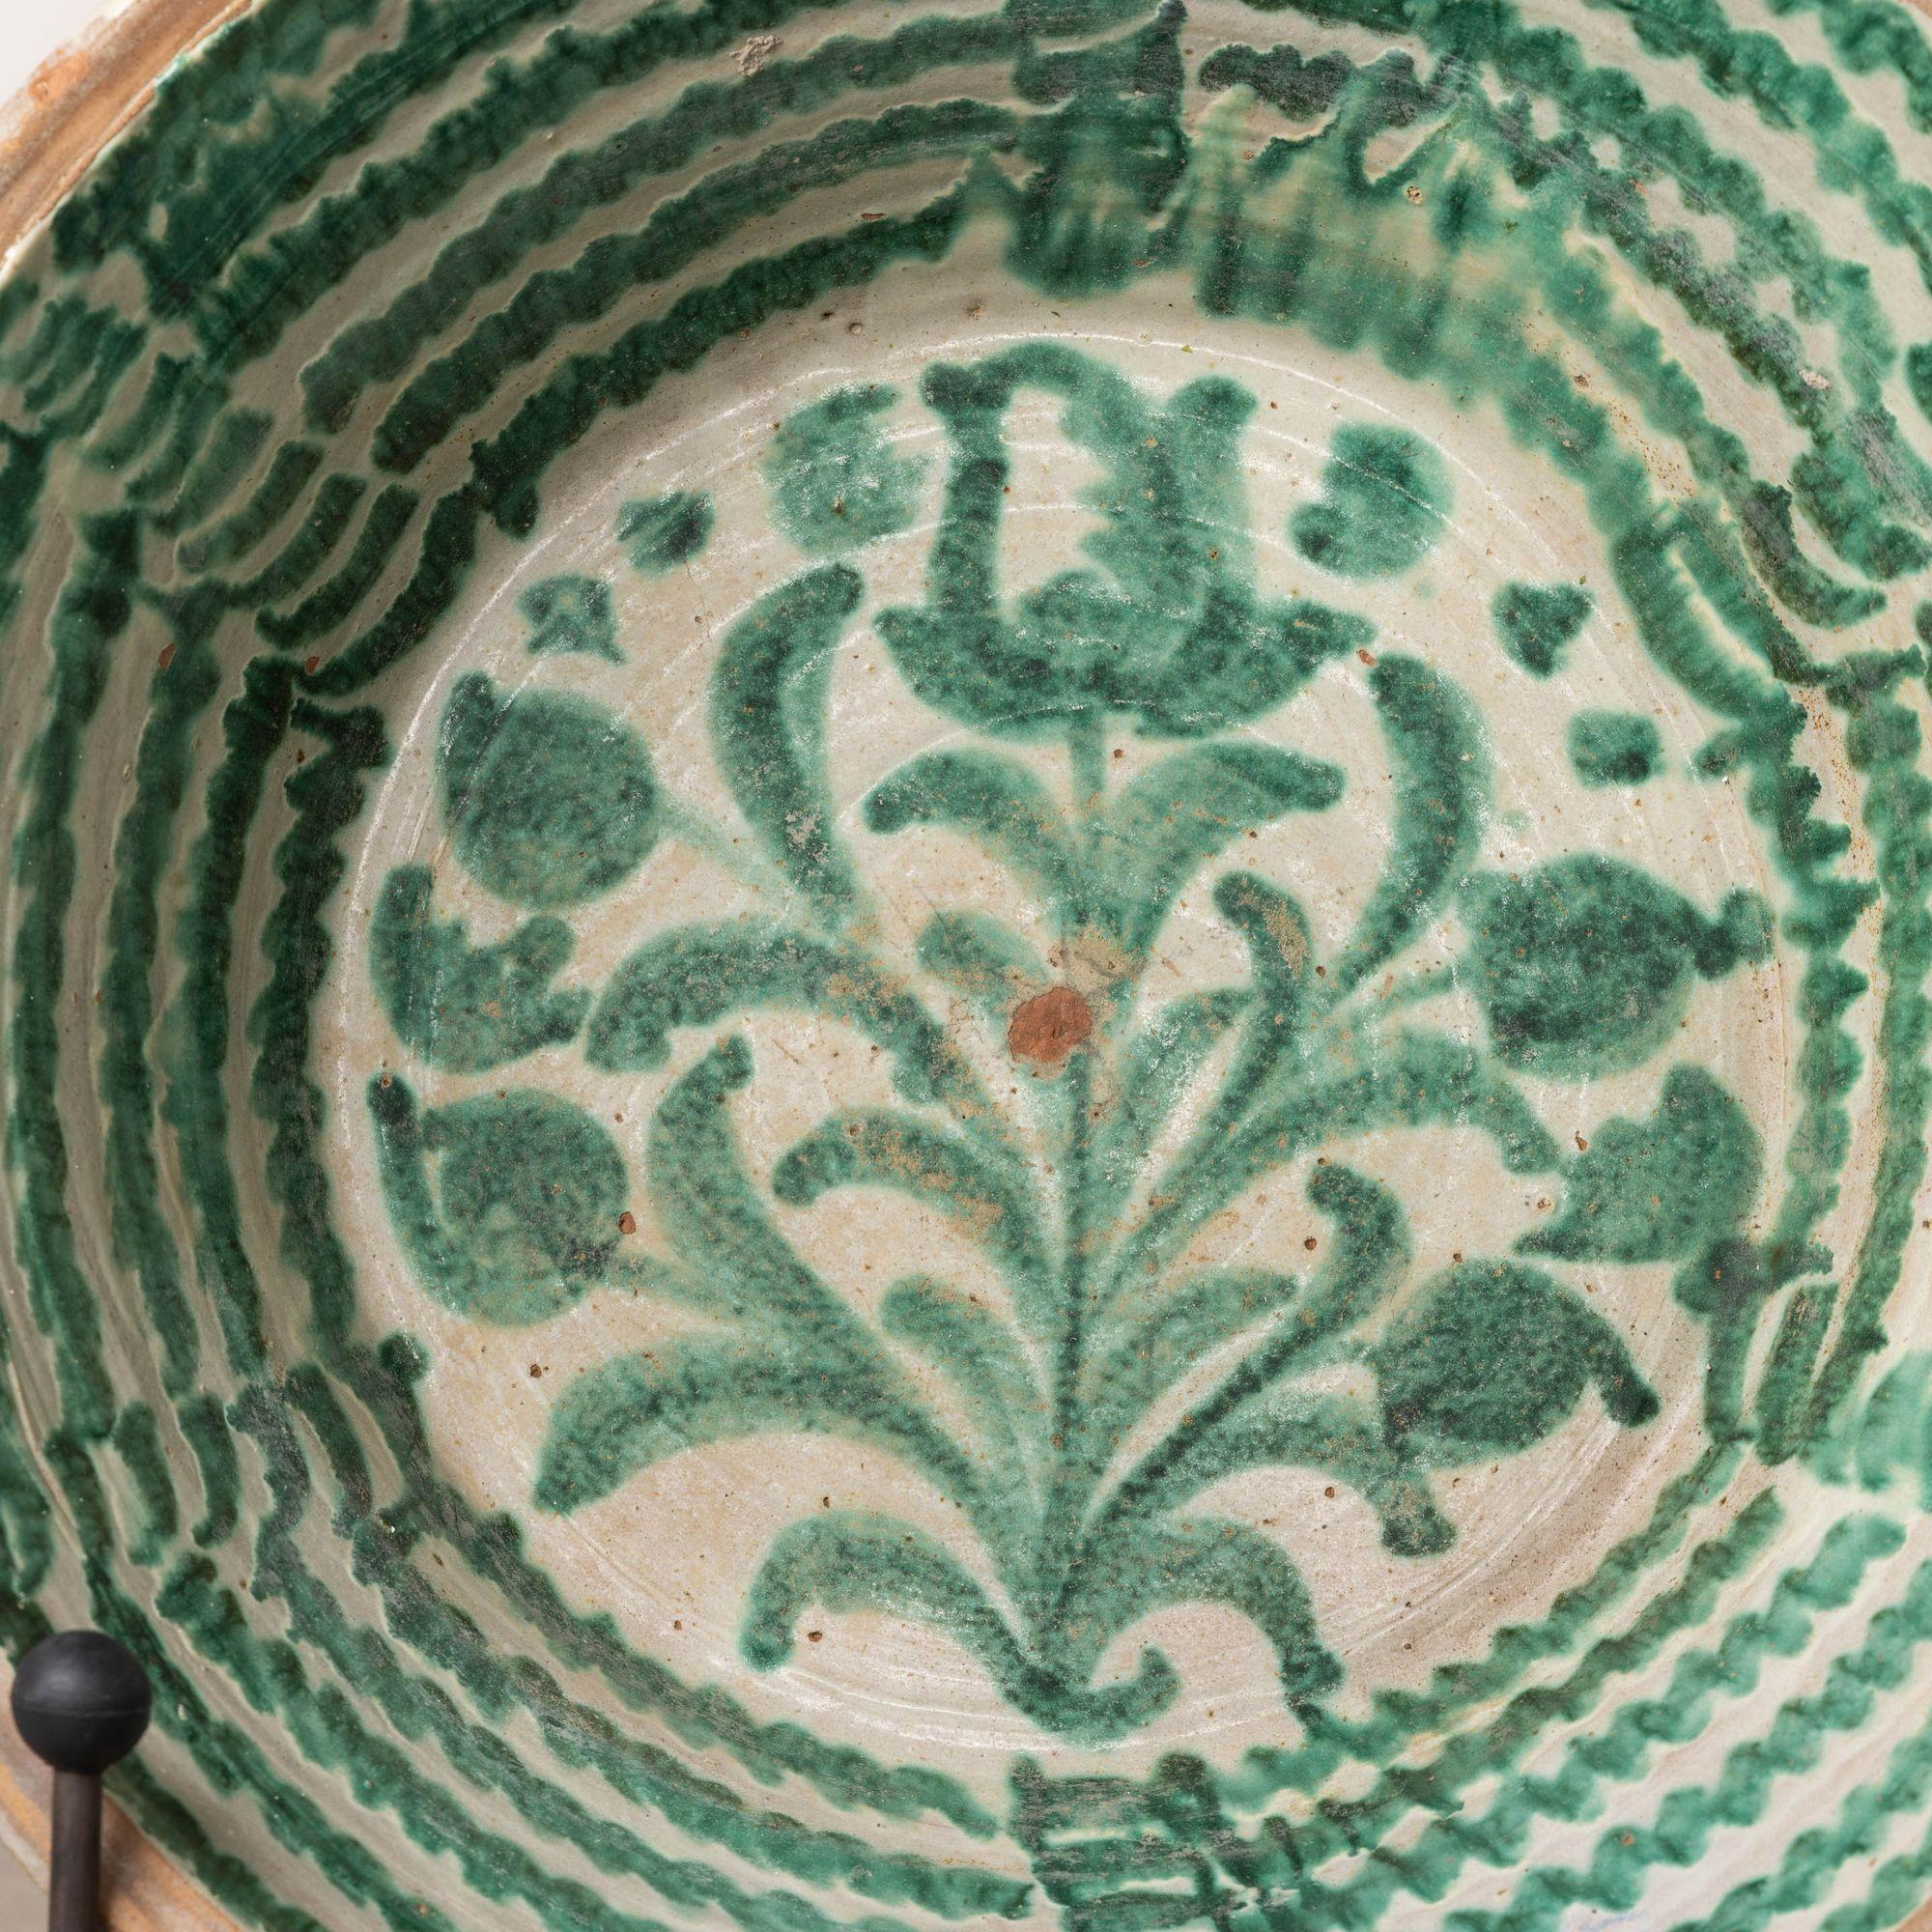 19th Century 19th c. Large Spanish Green Fajalauza Lebrillo Bowl from Granada For Sale